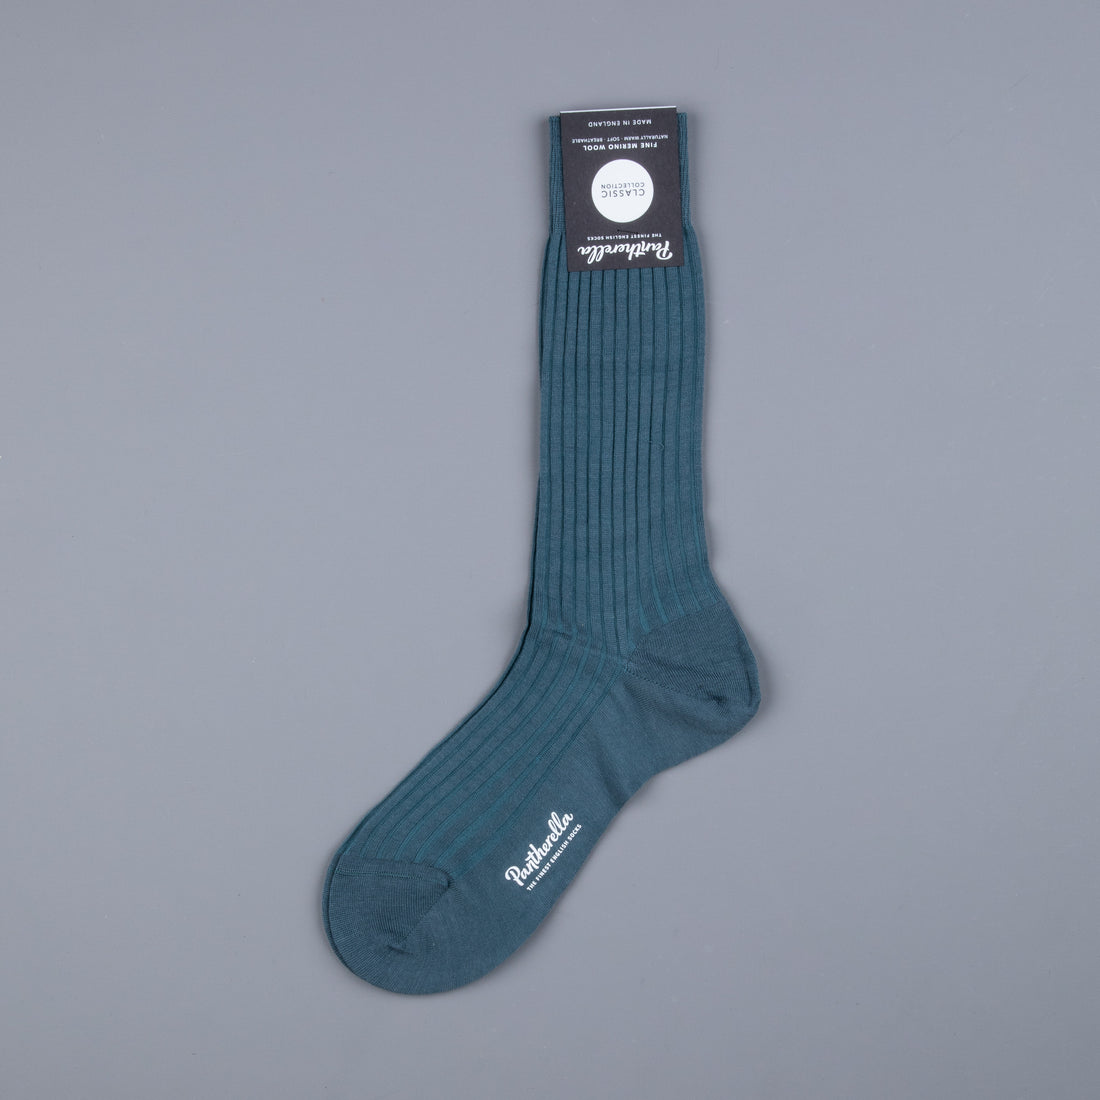 Frans Boone x Pantherella Laburnum Merino Wool Ankle High Socks Teal